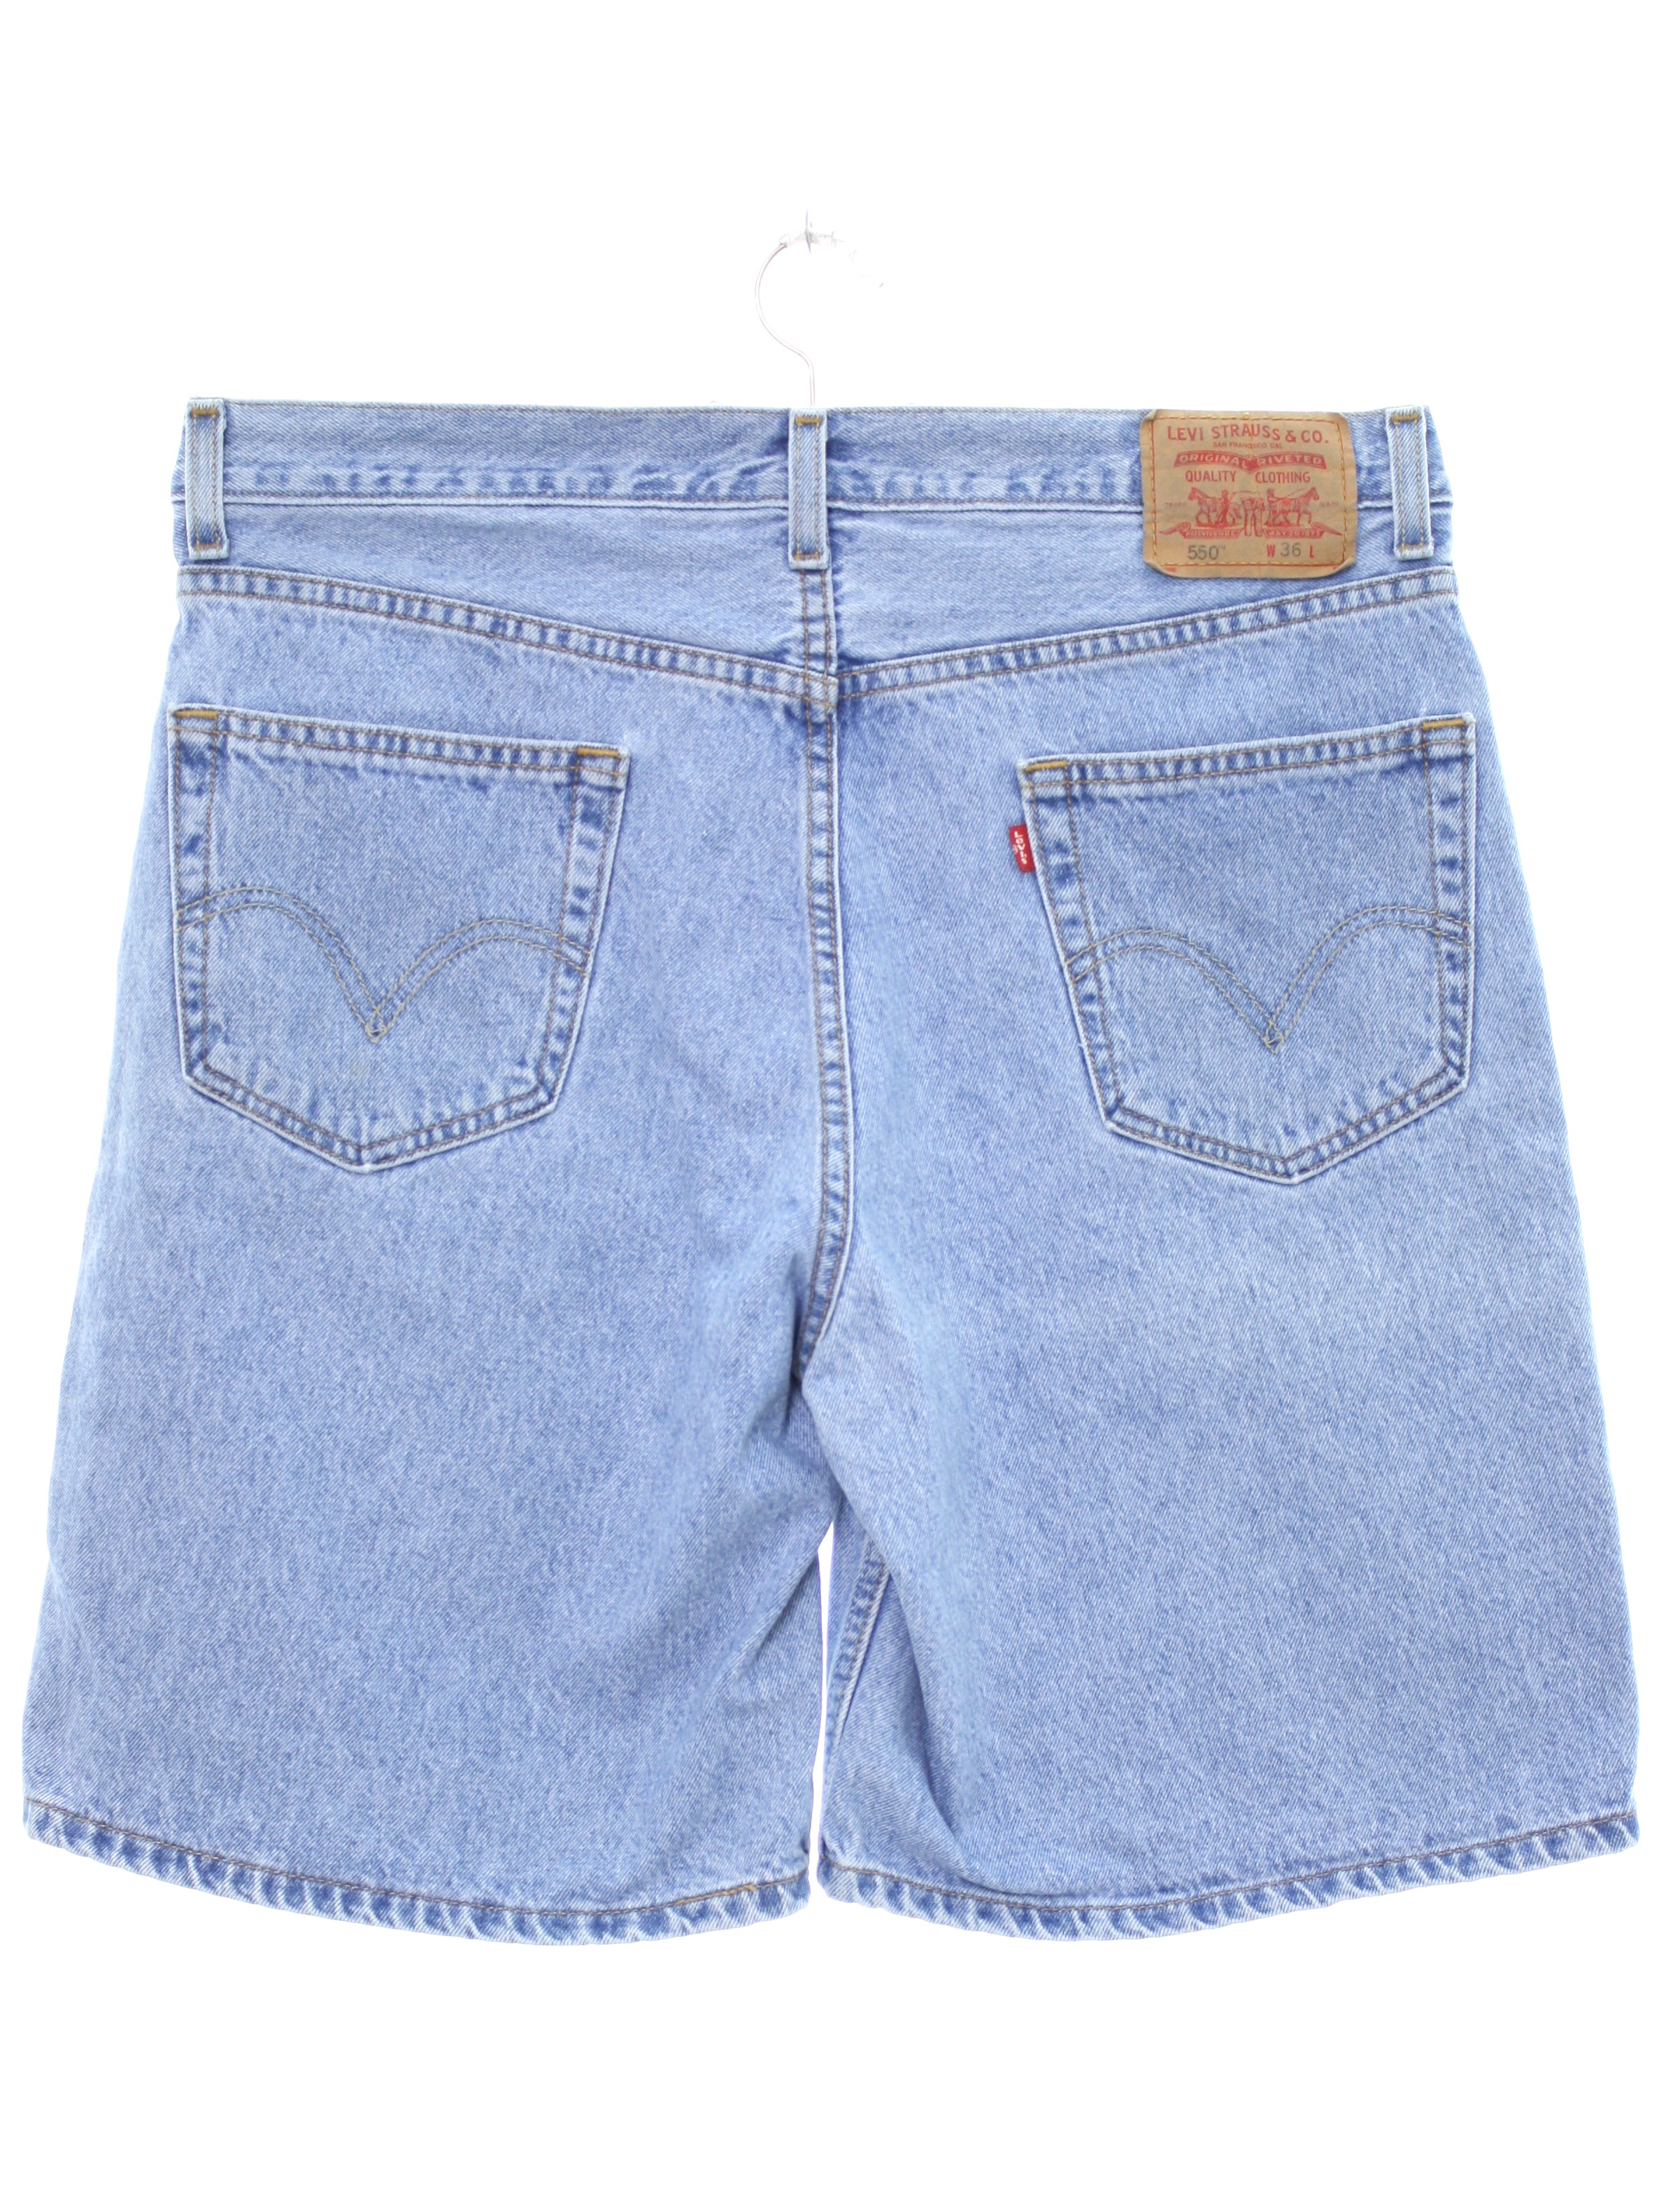 levi's 550 jean shorts